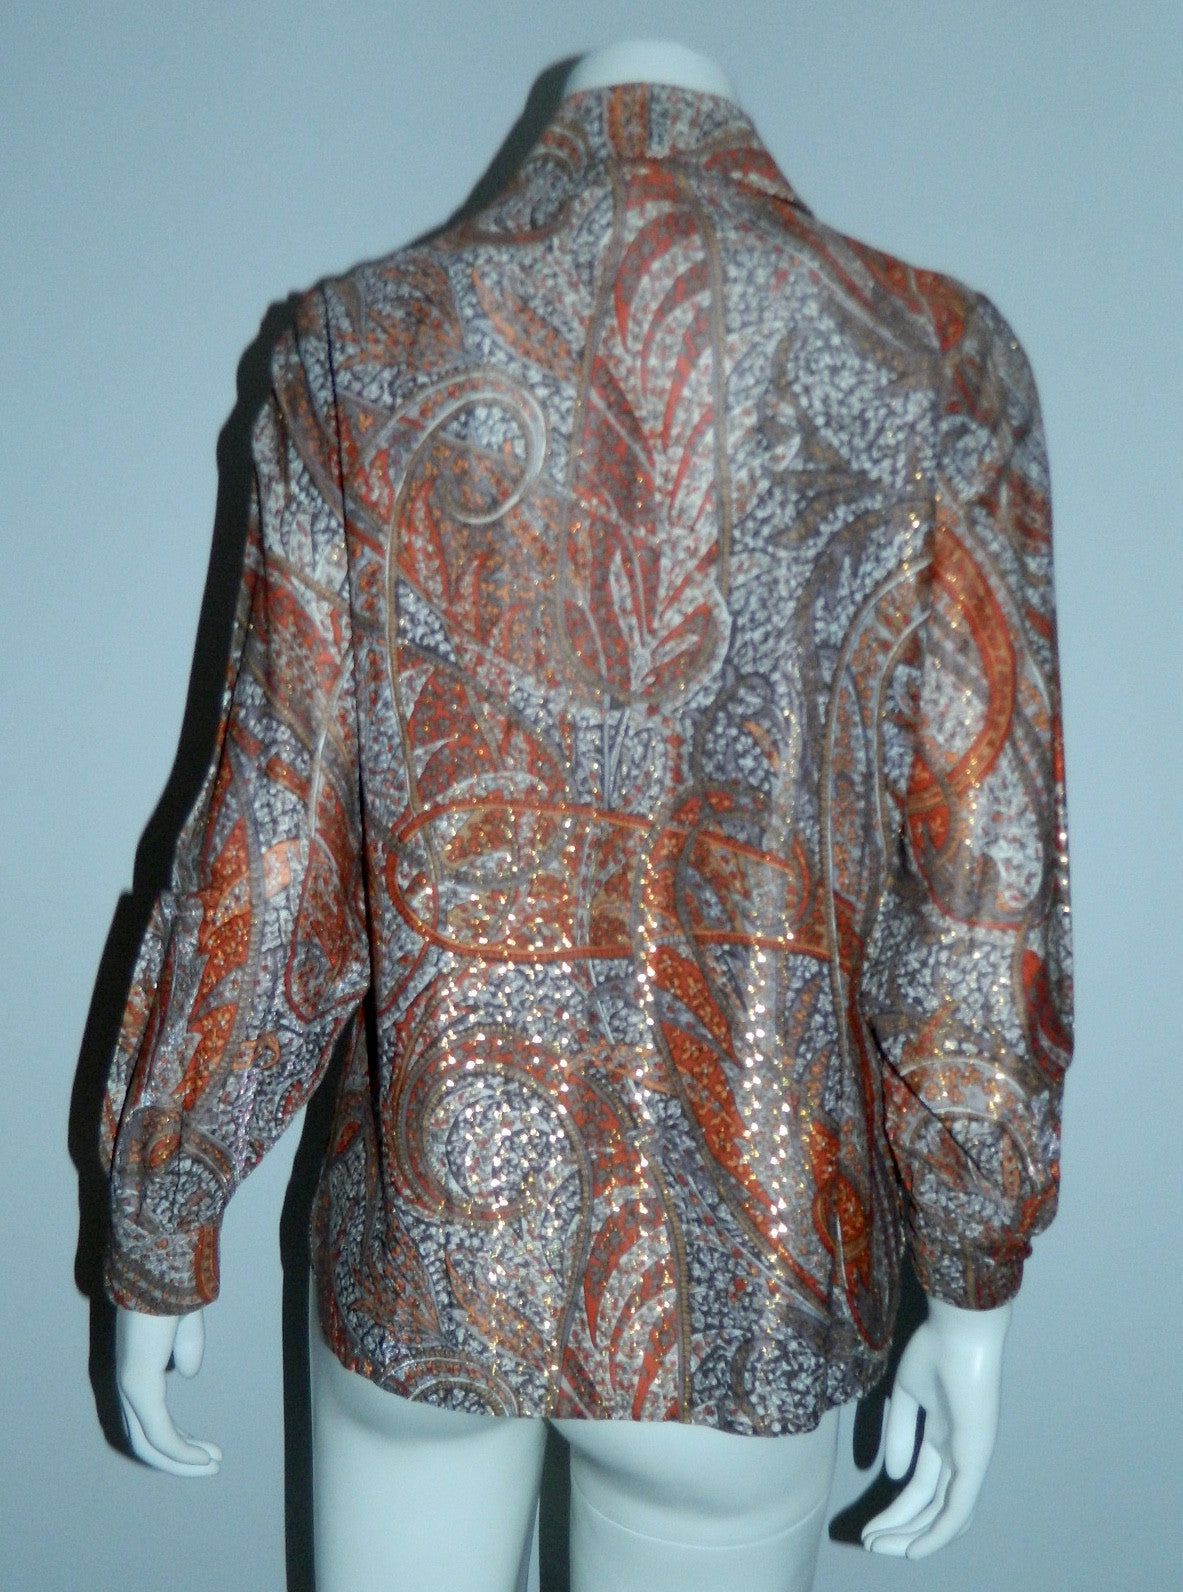 MOD vintage 1960s metallic paisley blouse GLAM earthtones S - M